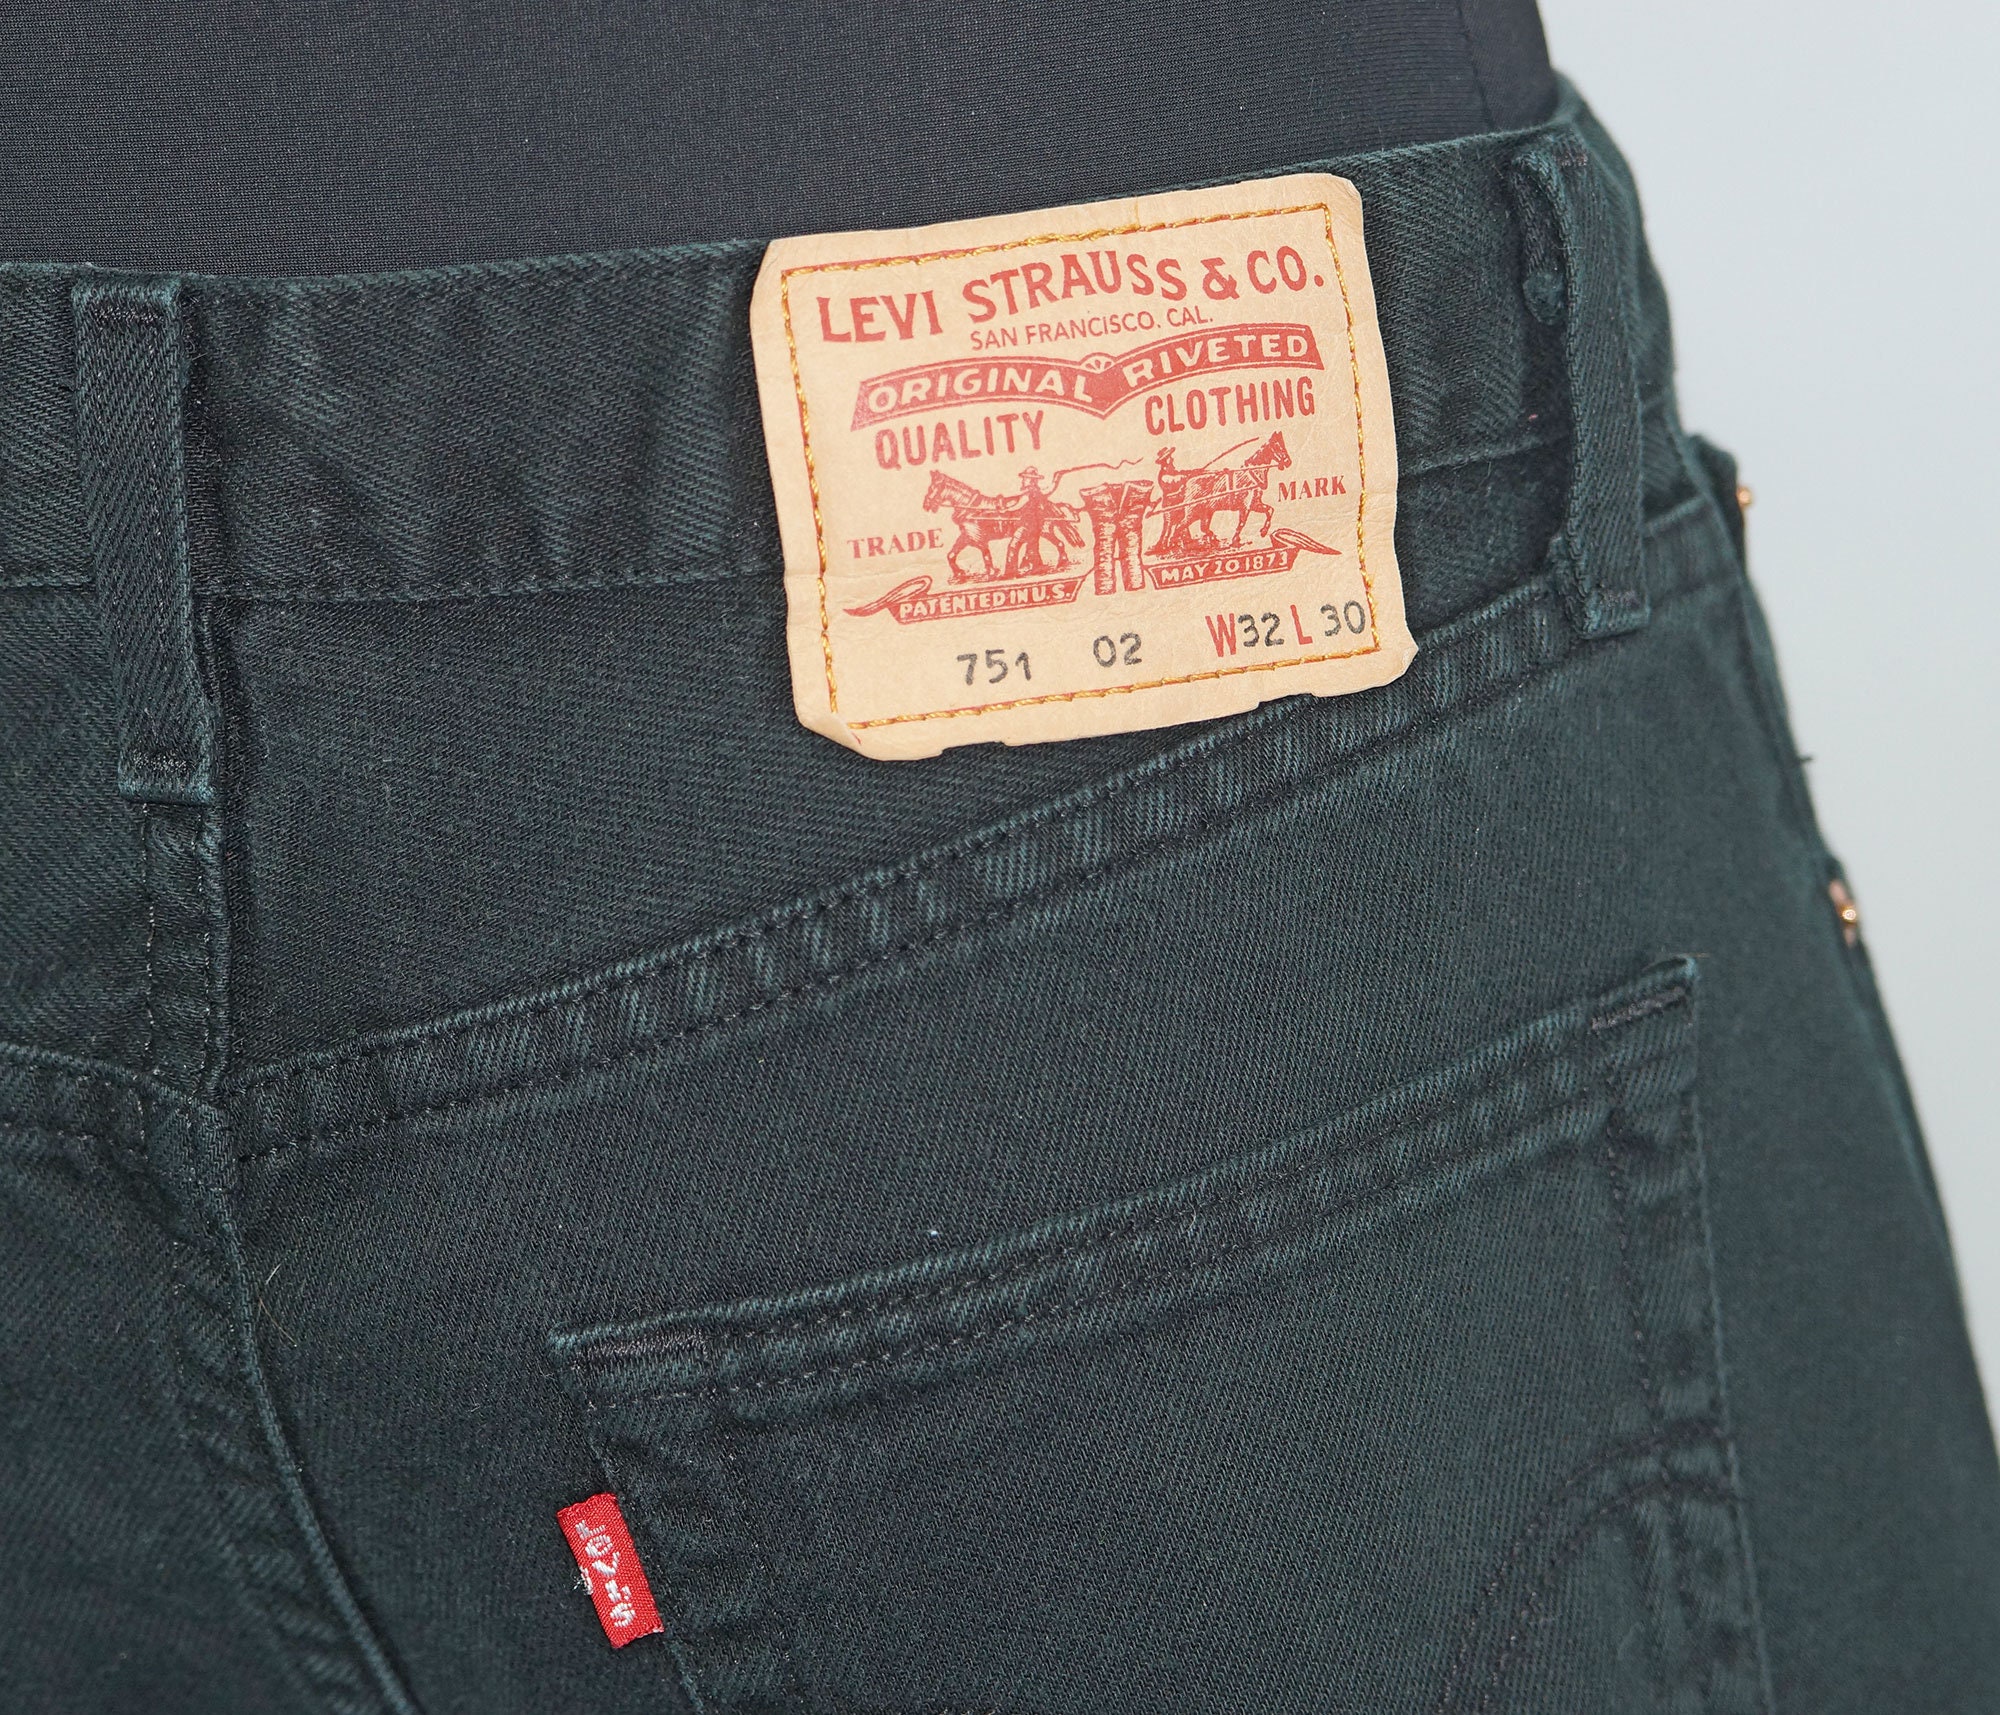 Black Zip Jeans Vintage Levi's 751 Jeans Marked Size W - Etsy Israel